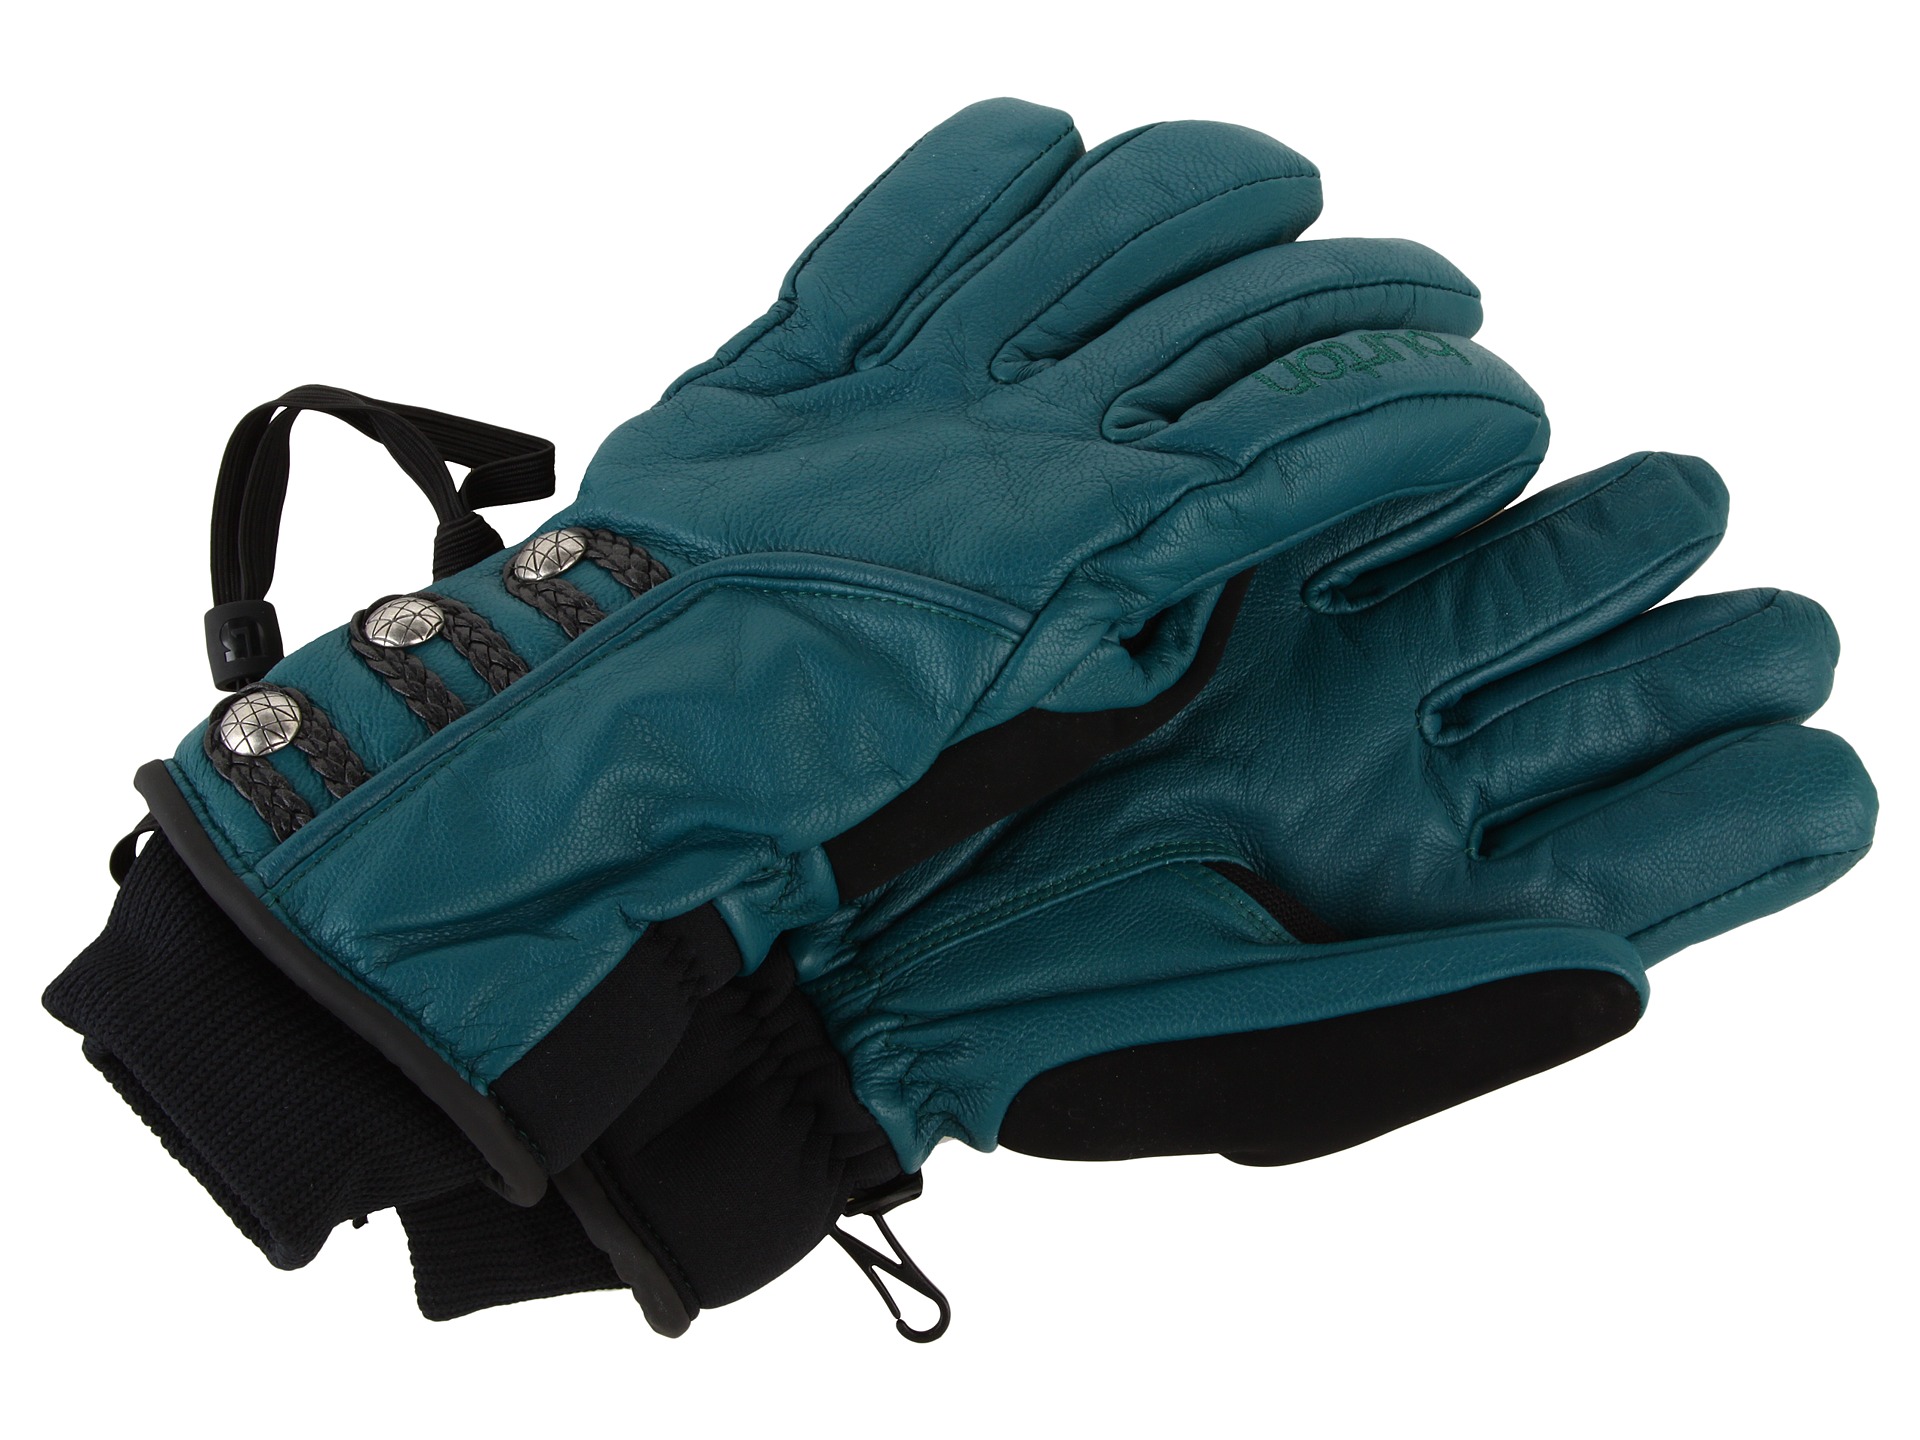 Burton Favorite Leather Glove Womens $64.99 $74.95 SALE